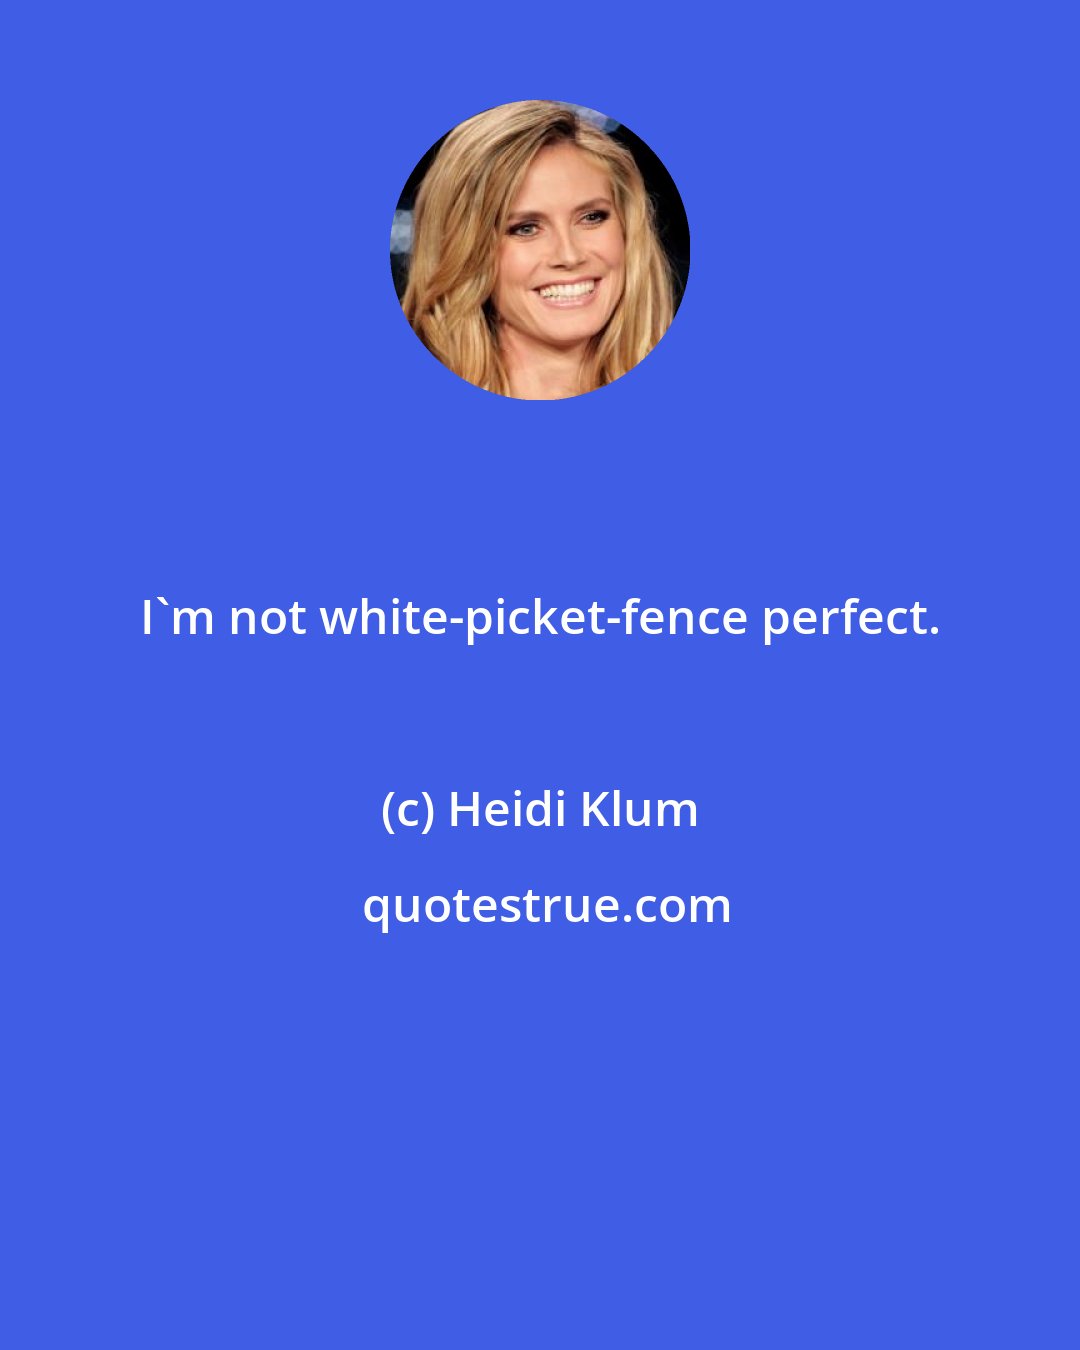 Heidi Klum: I'm not white-picket-fence perfect.